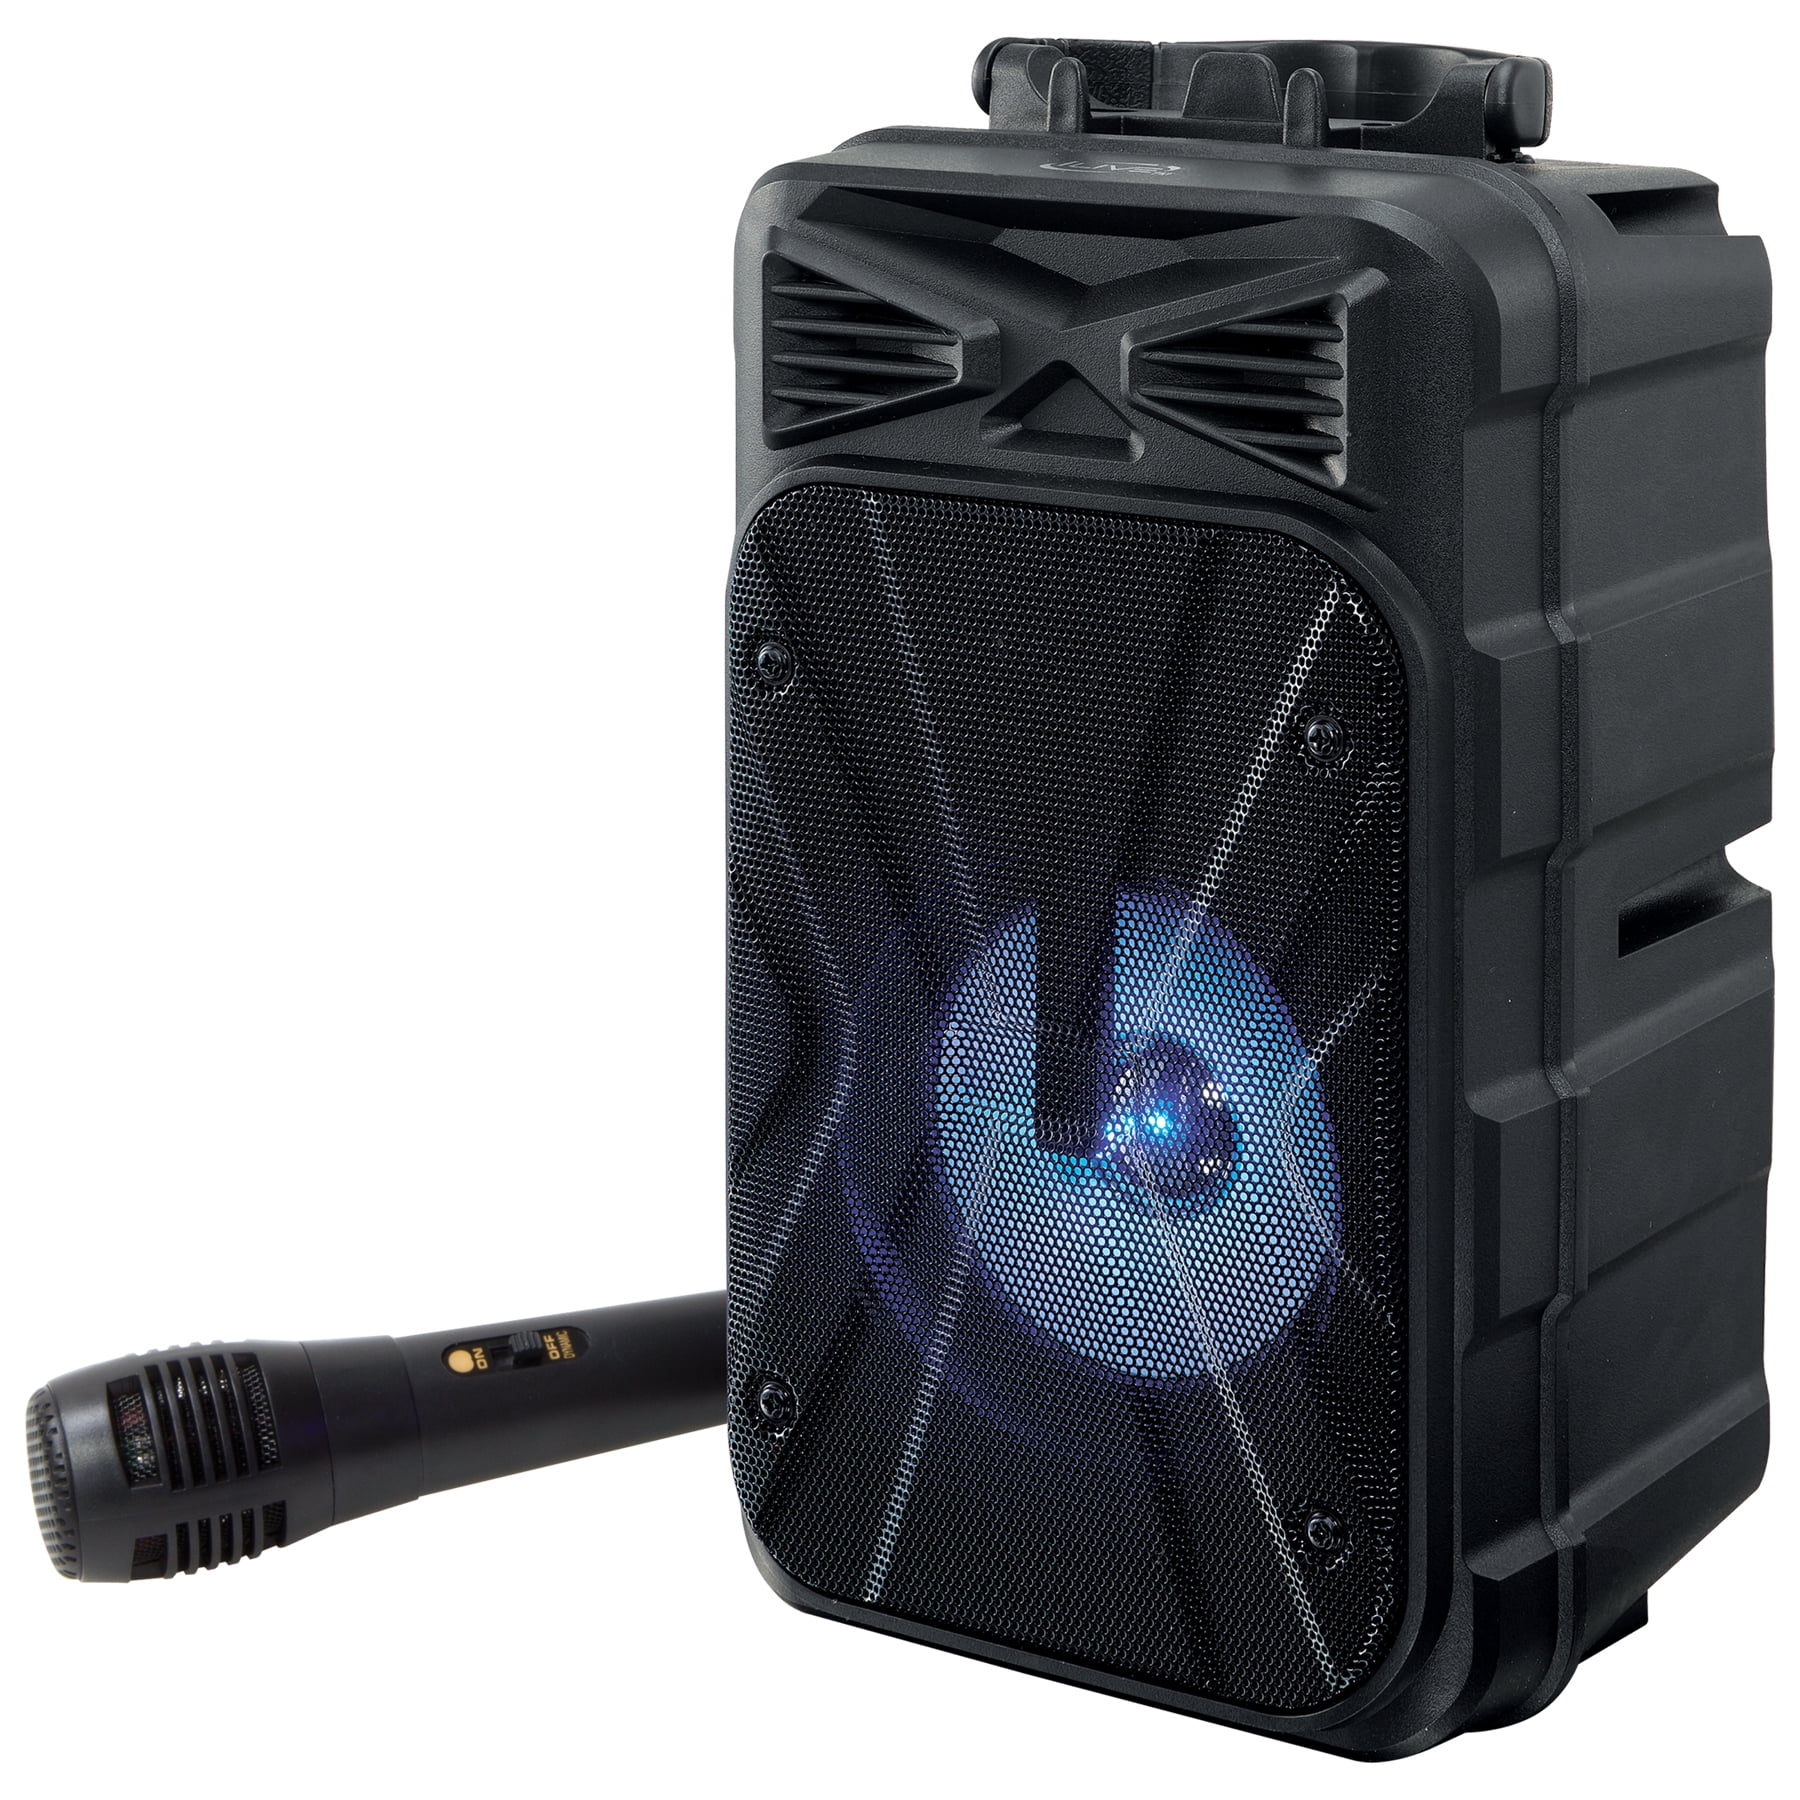 iLive Bluetooth Karaoke Machine with LED Light, IJMB485B 